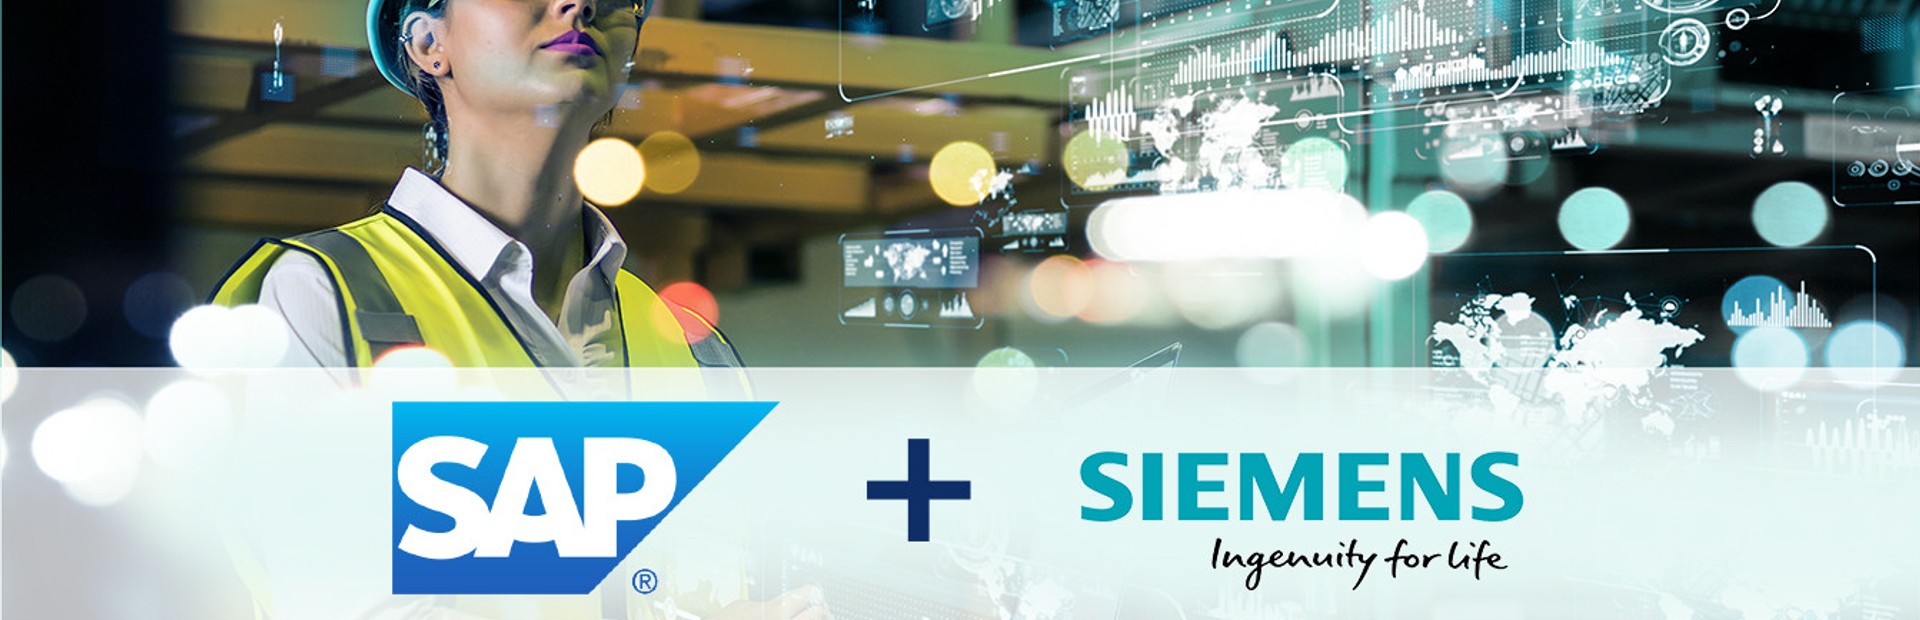 Partnerství Siemens - SAP